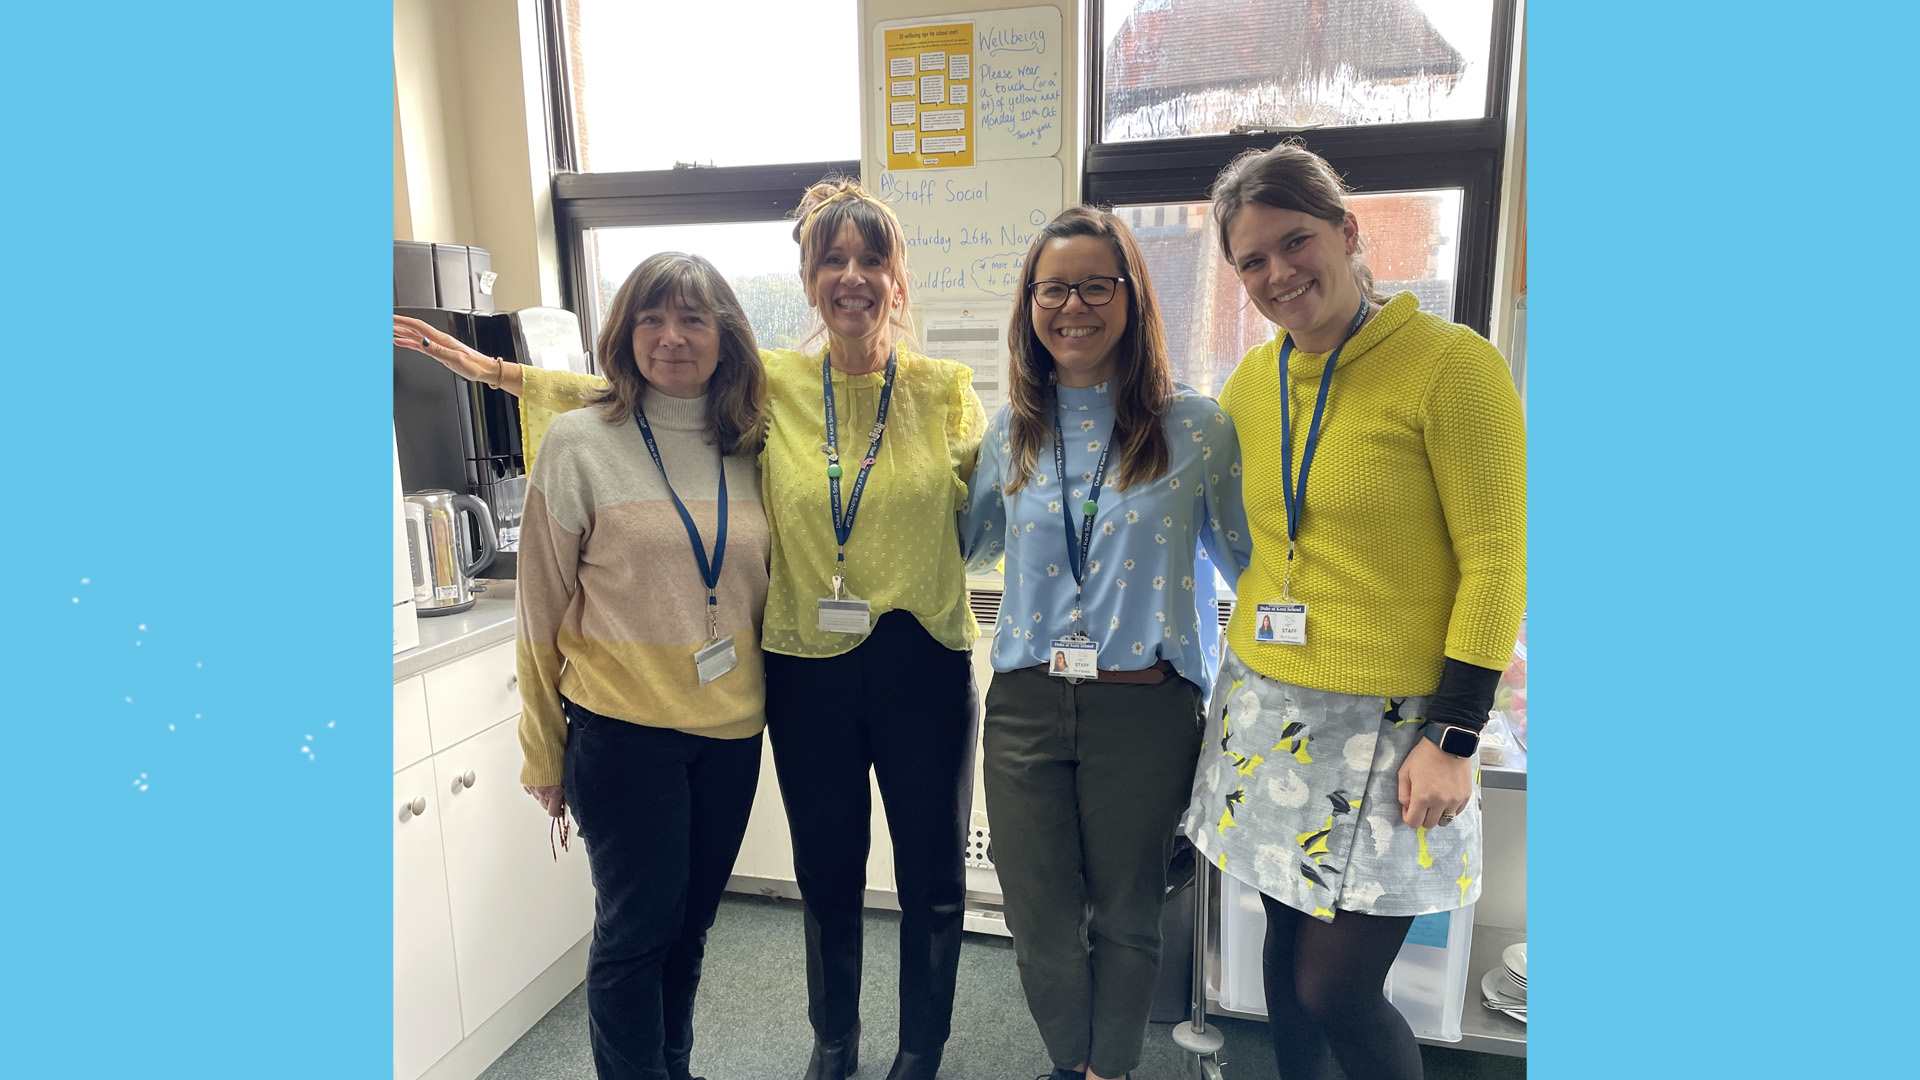 Staff at Duke of Kent School wearing yellow.